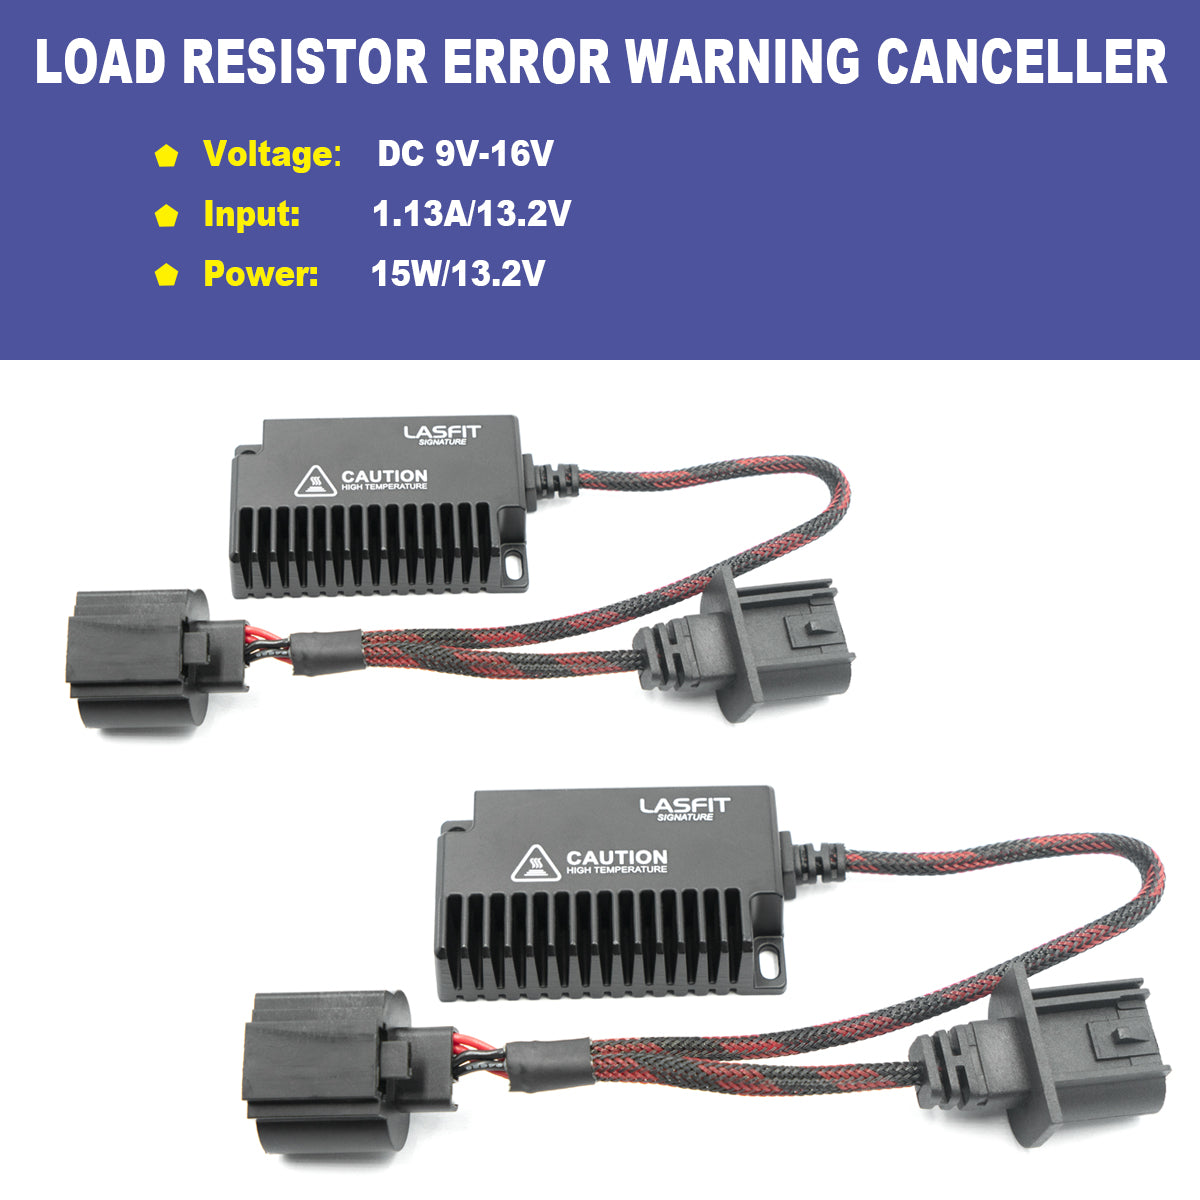 H13 9008 LED Bulb Resistor Decoder｜Lasfit Auto Lighting